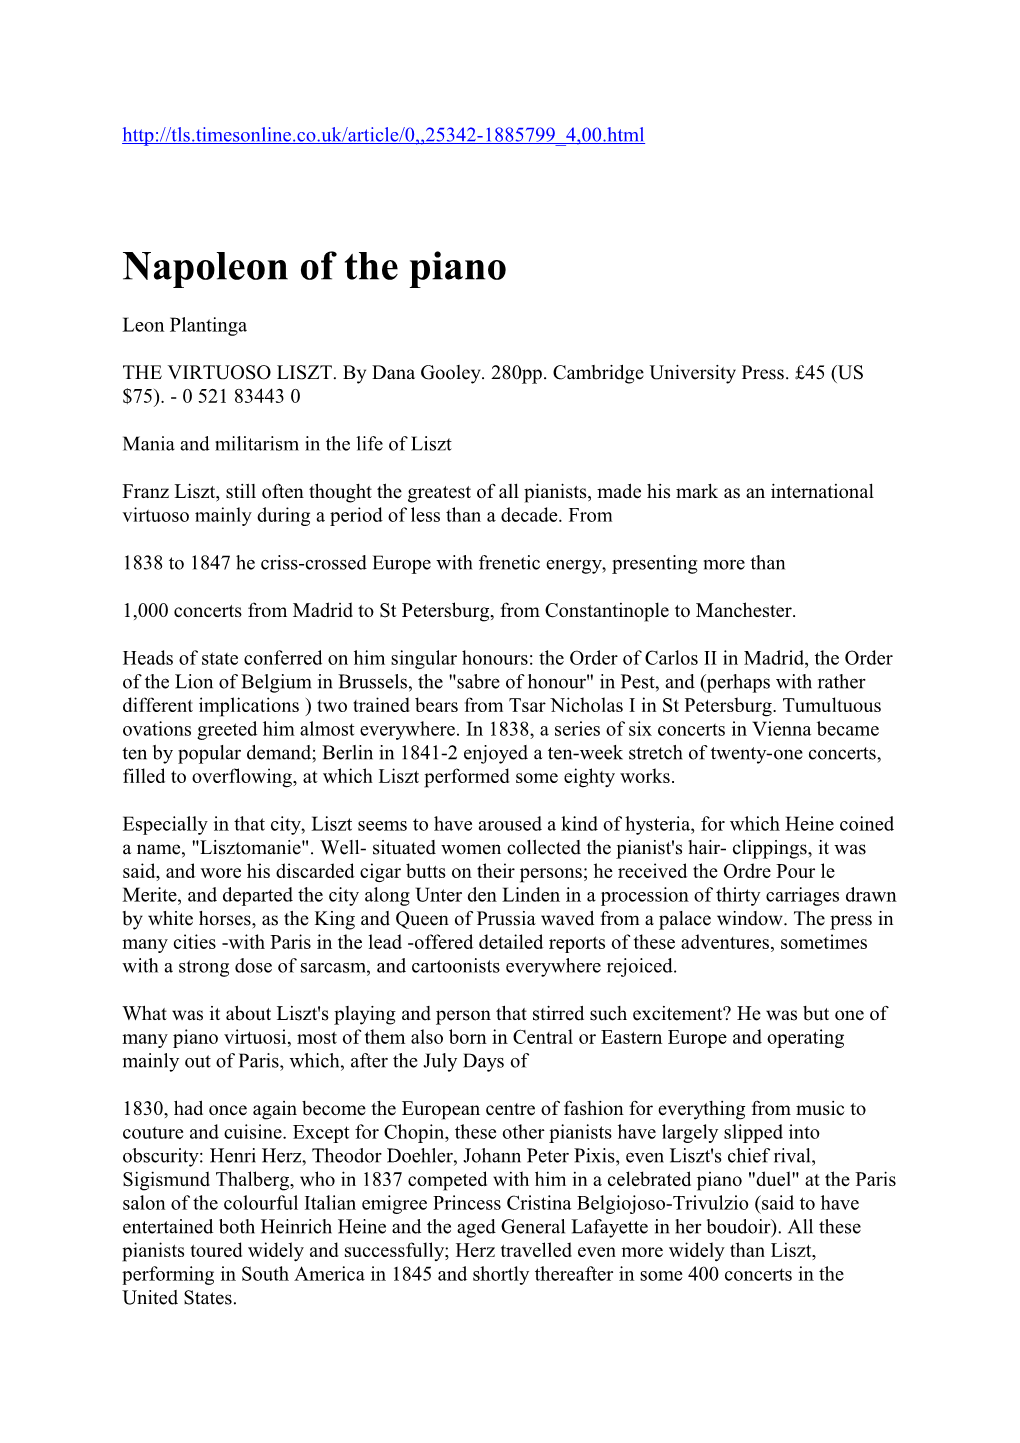 Napoleon of the Piano